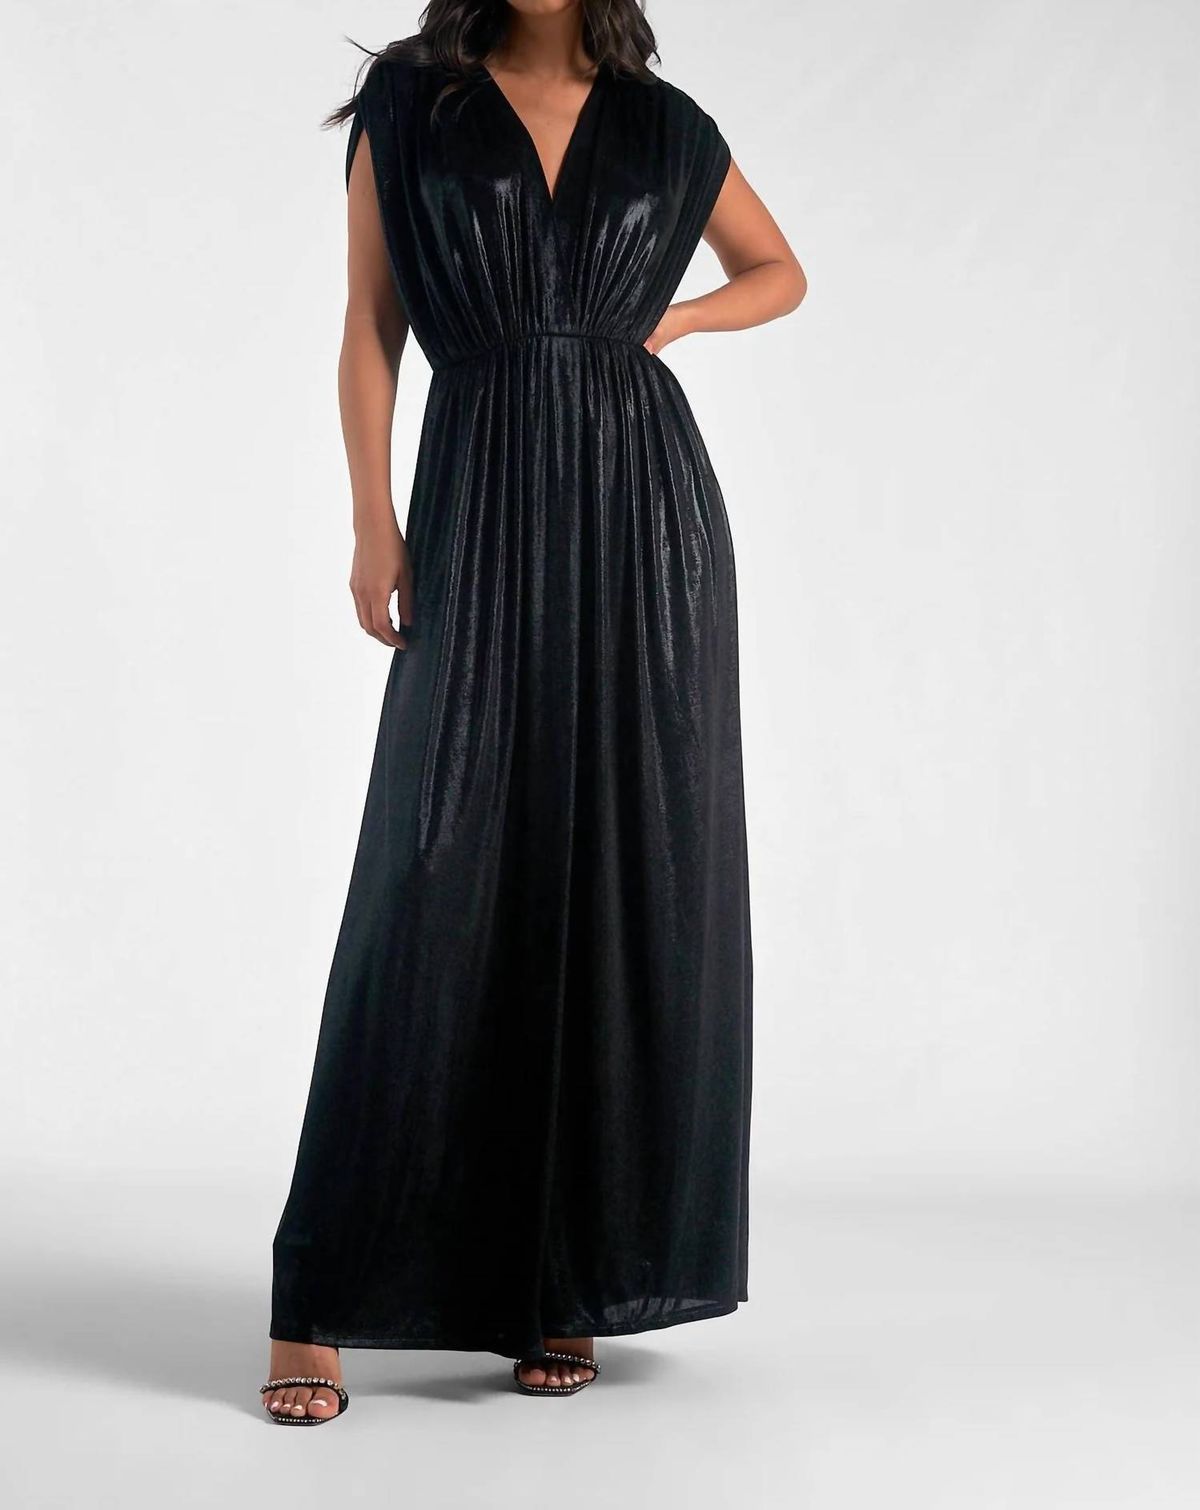 Style 1-1904002267-3236 ELAN Size S Black Side Slit Dress on Queenly